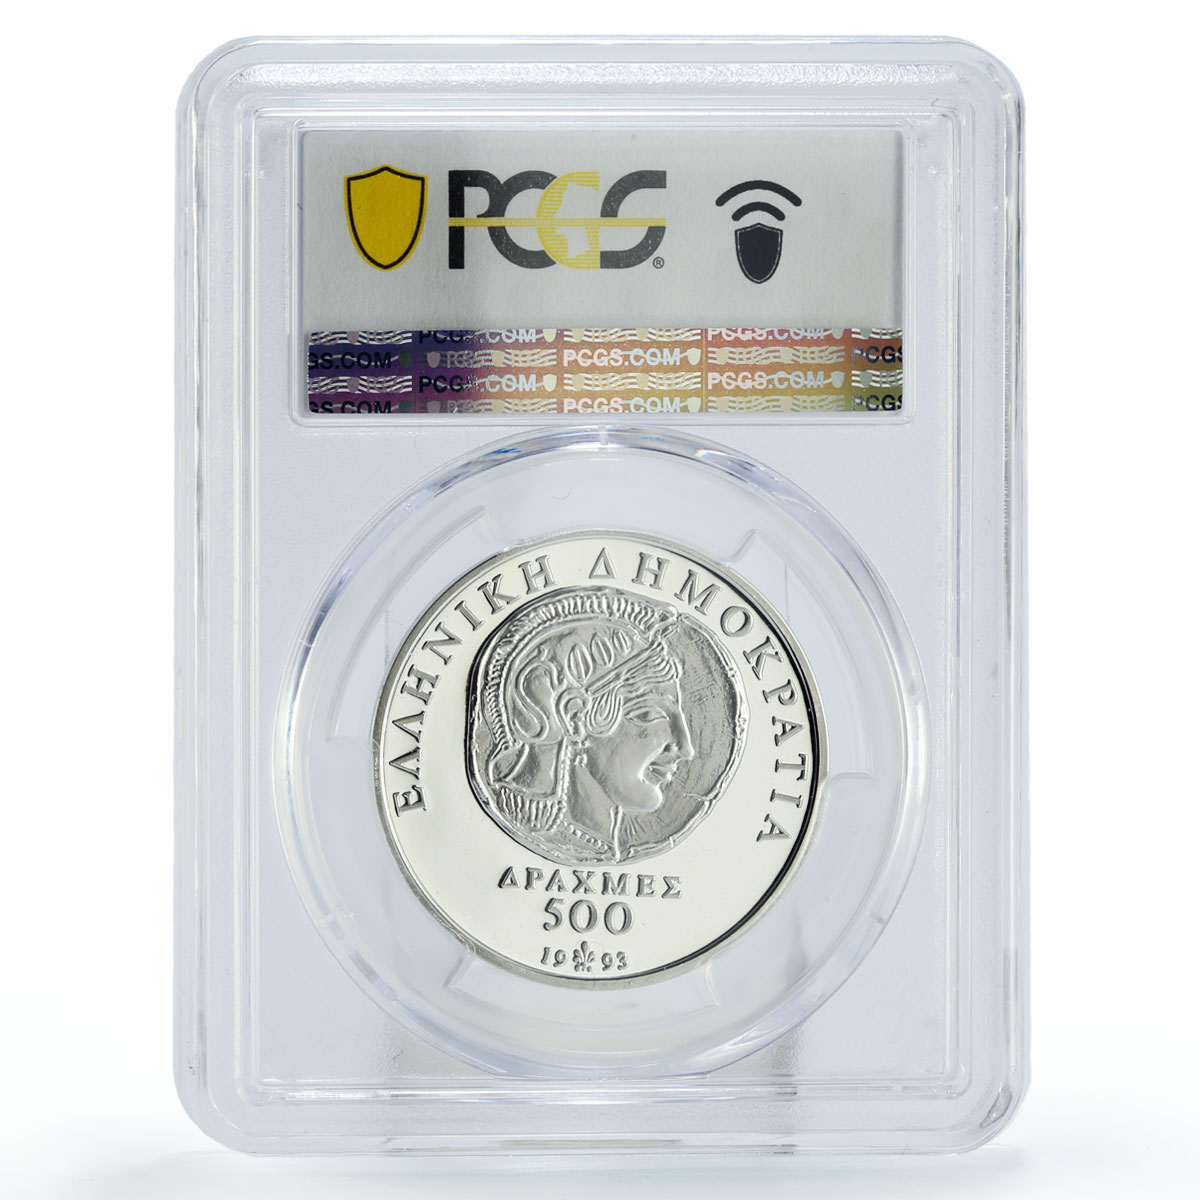 Greece 500 drachmes Democracy Anniversary Seated Zeus PR69 PCGS silver coin 1993